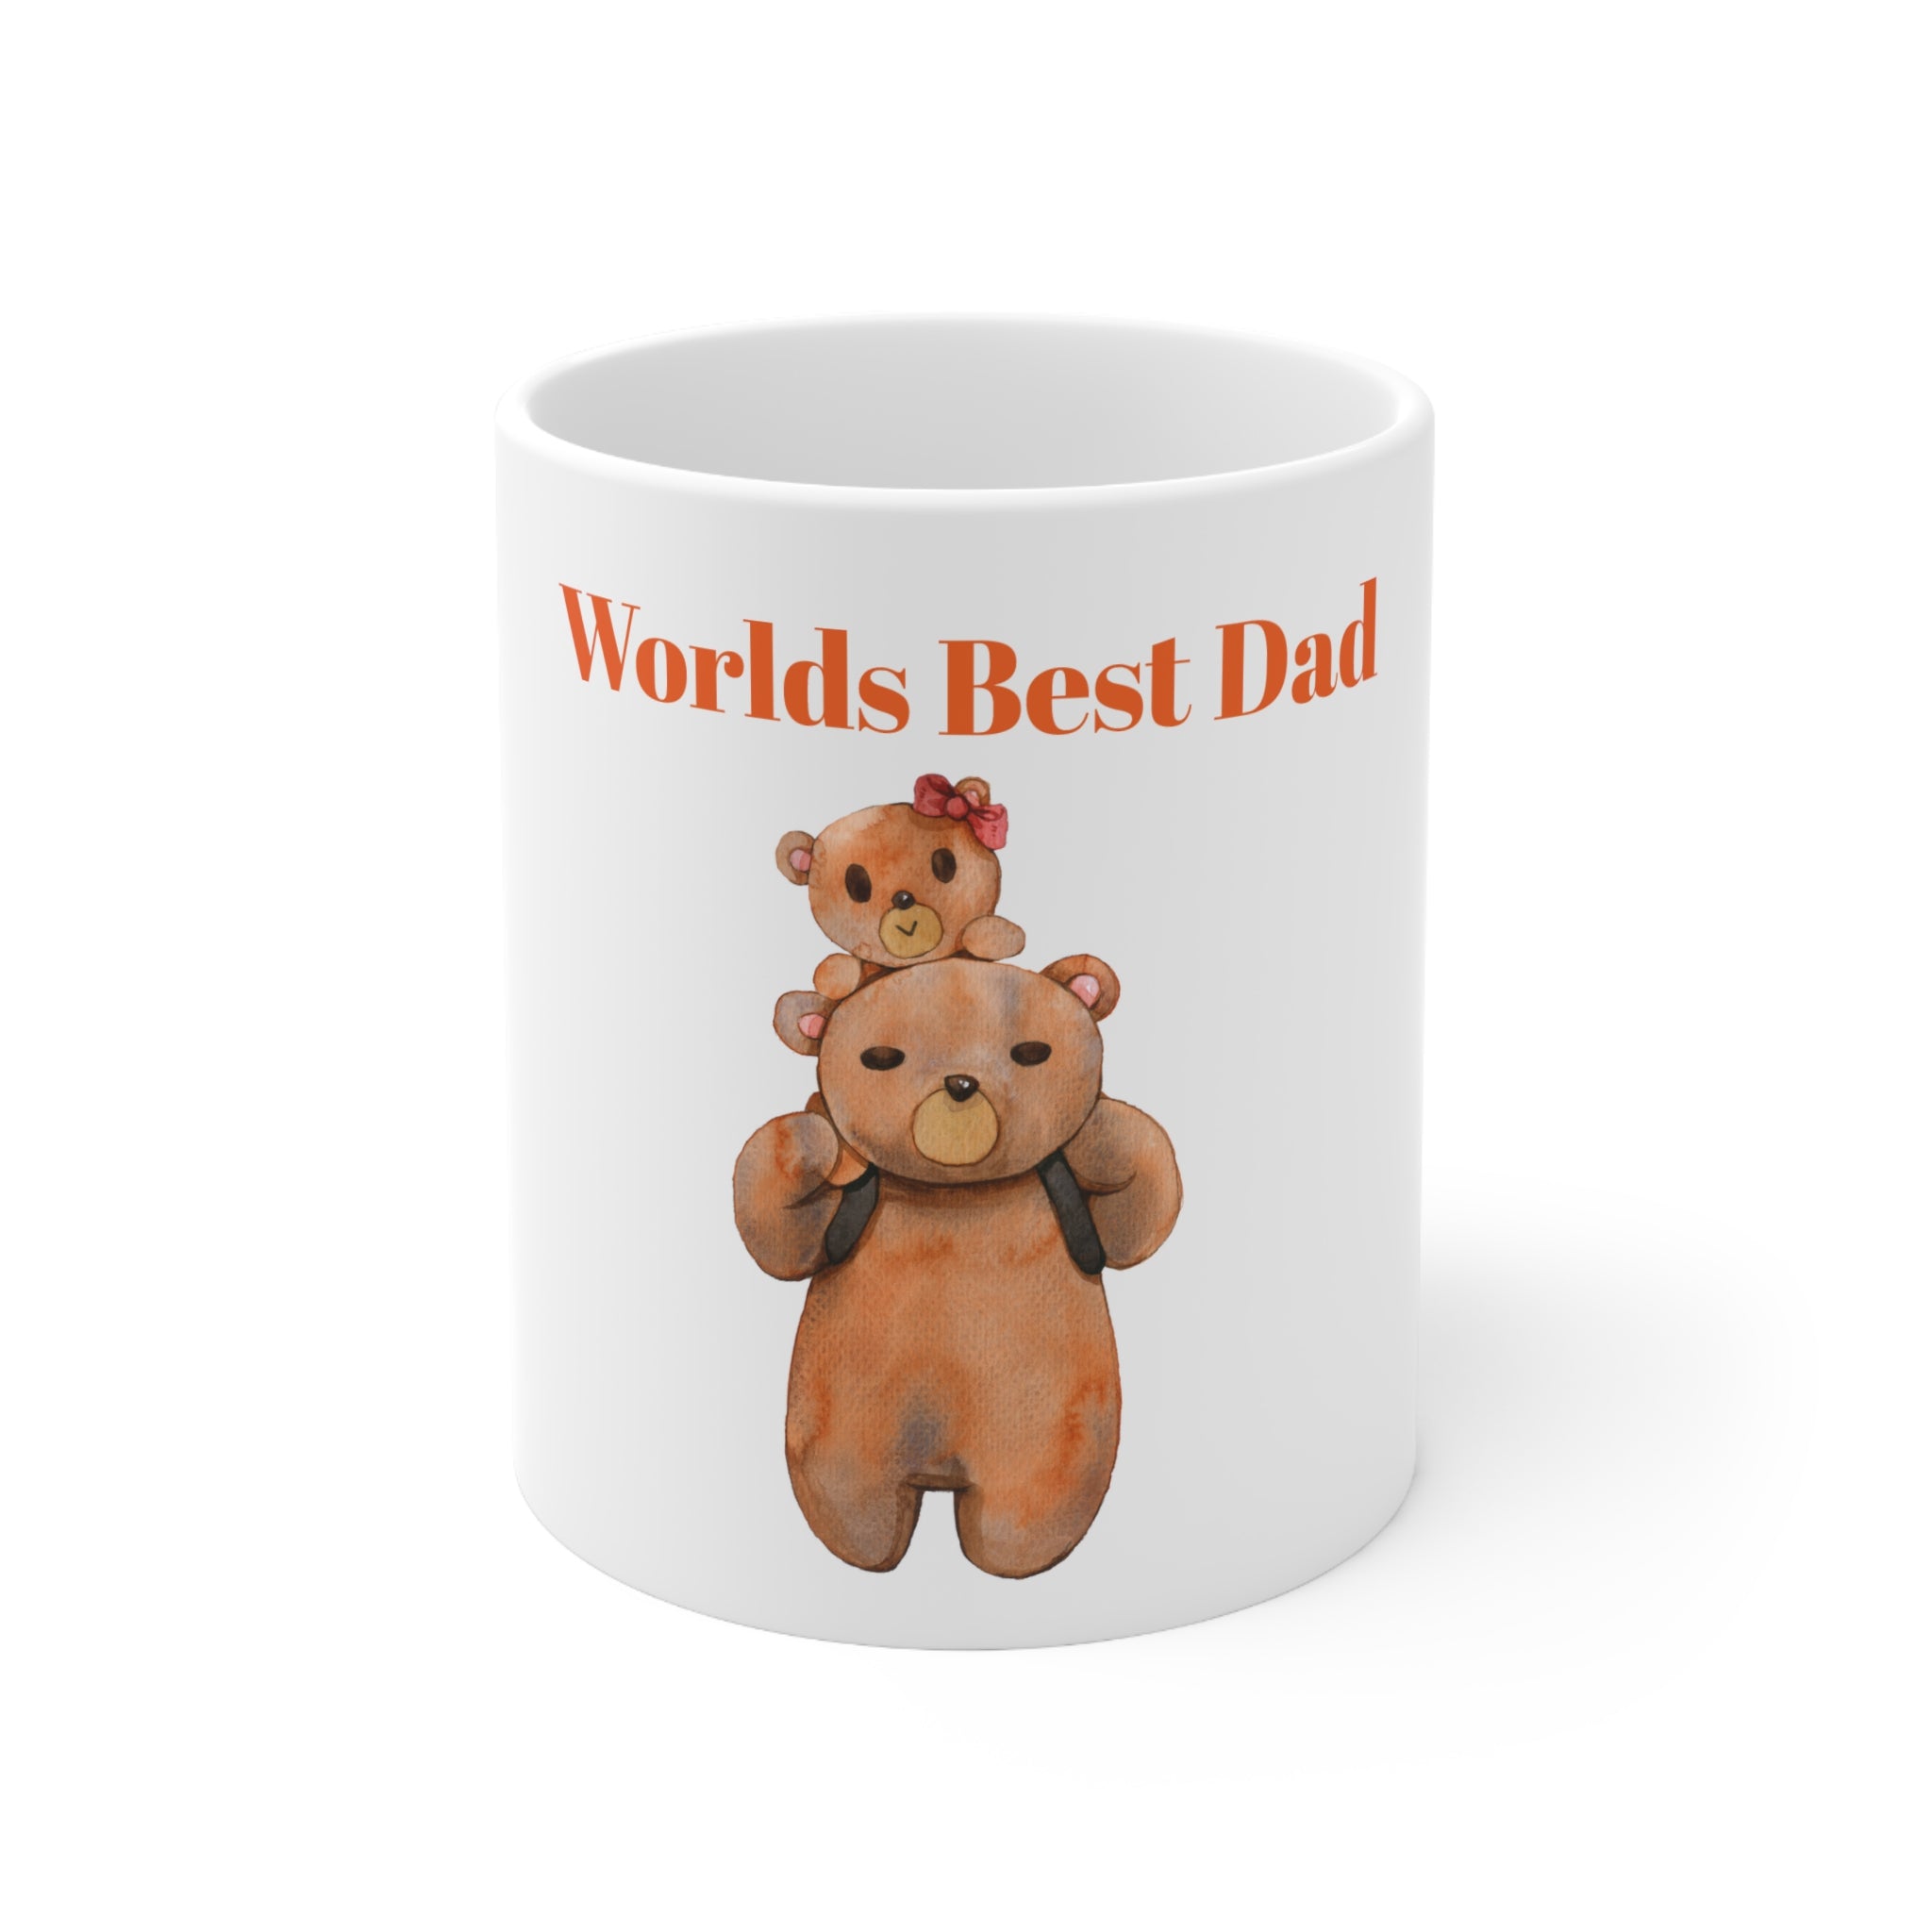 Ceramic Mug 11oz - World's Best Dad - Featuring Heartwarming Bear and Cub Design - Perfect Gift for Celebrating Fatherhood"